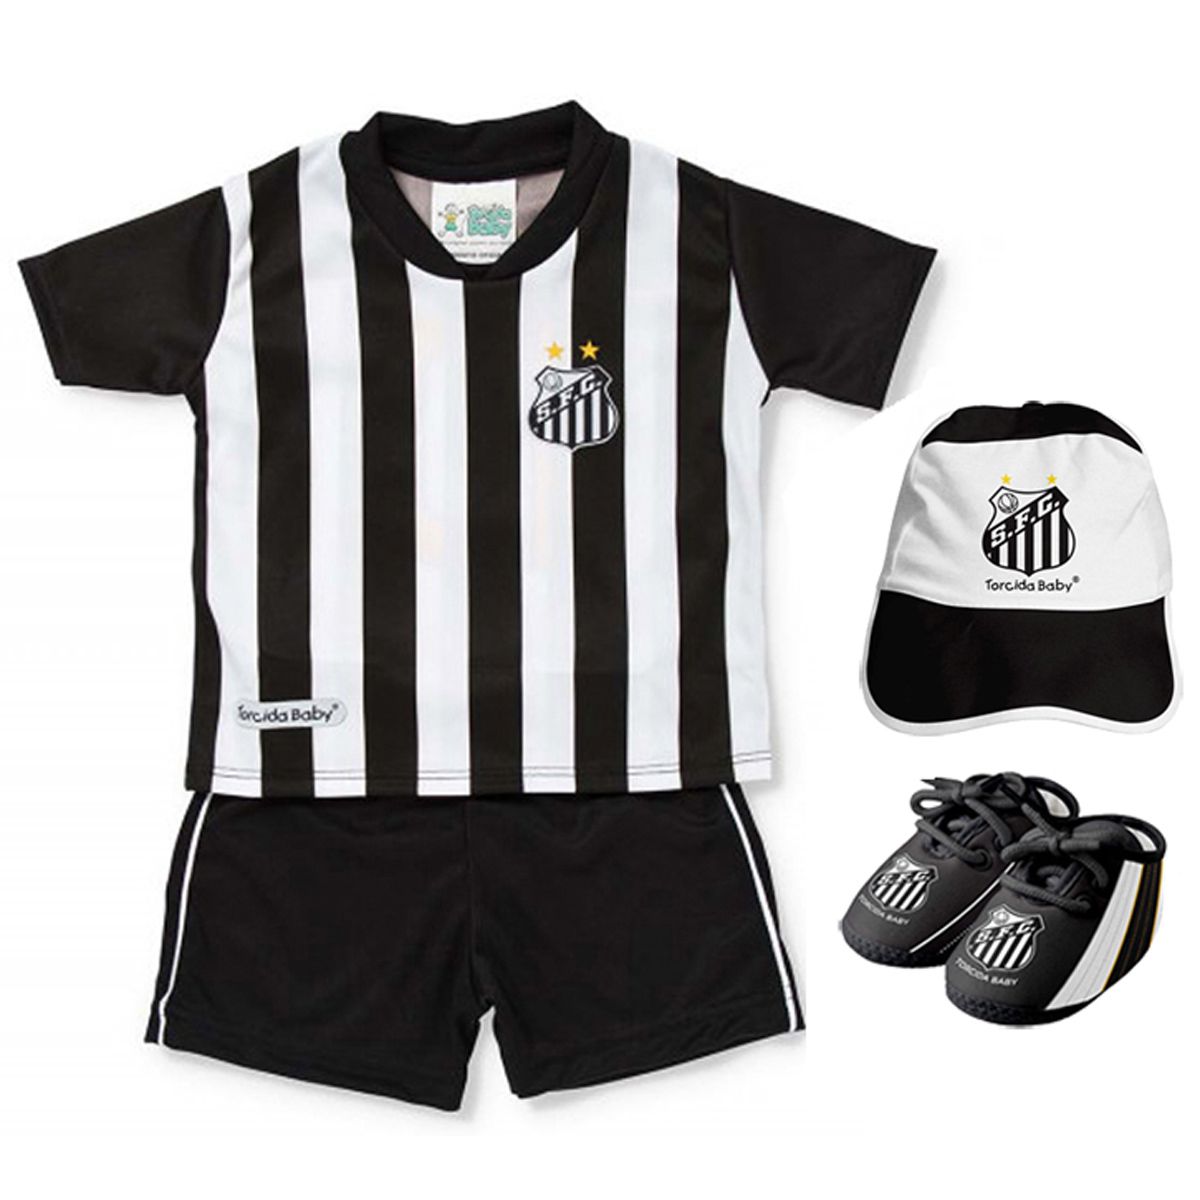 Kit Uniforme Bebê do Santos Torcida Baby - 015s